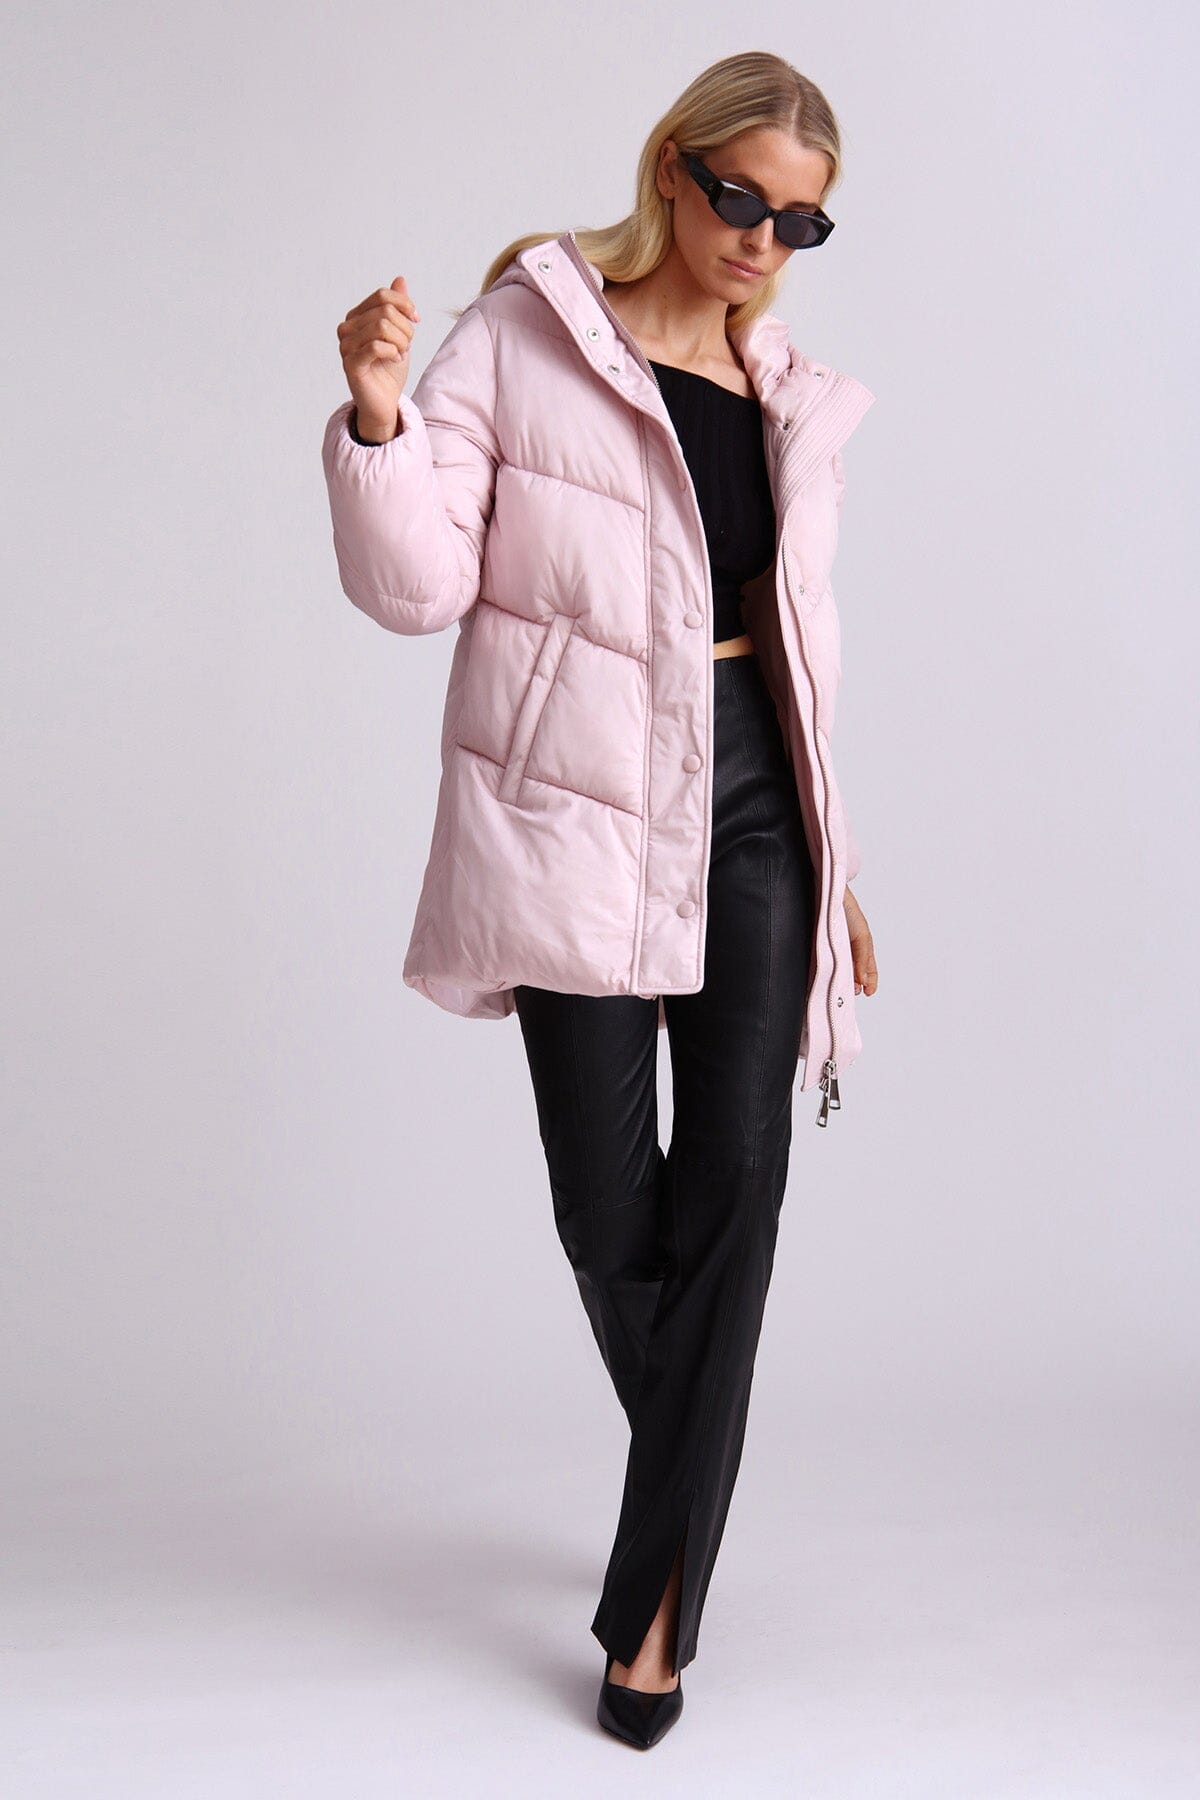 Light pink thermal puff cloud duvet hooded puffer coat jacket - women's figure flattering Fall fashion outerwear by Avec Les Filles